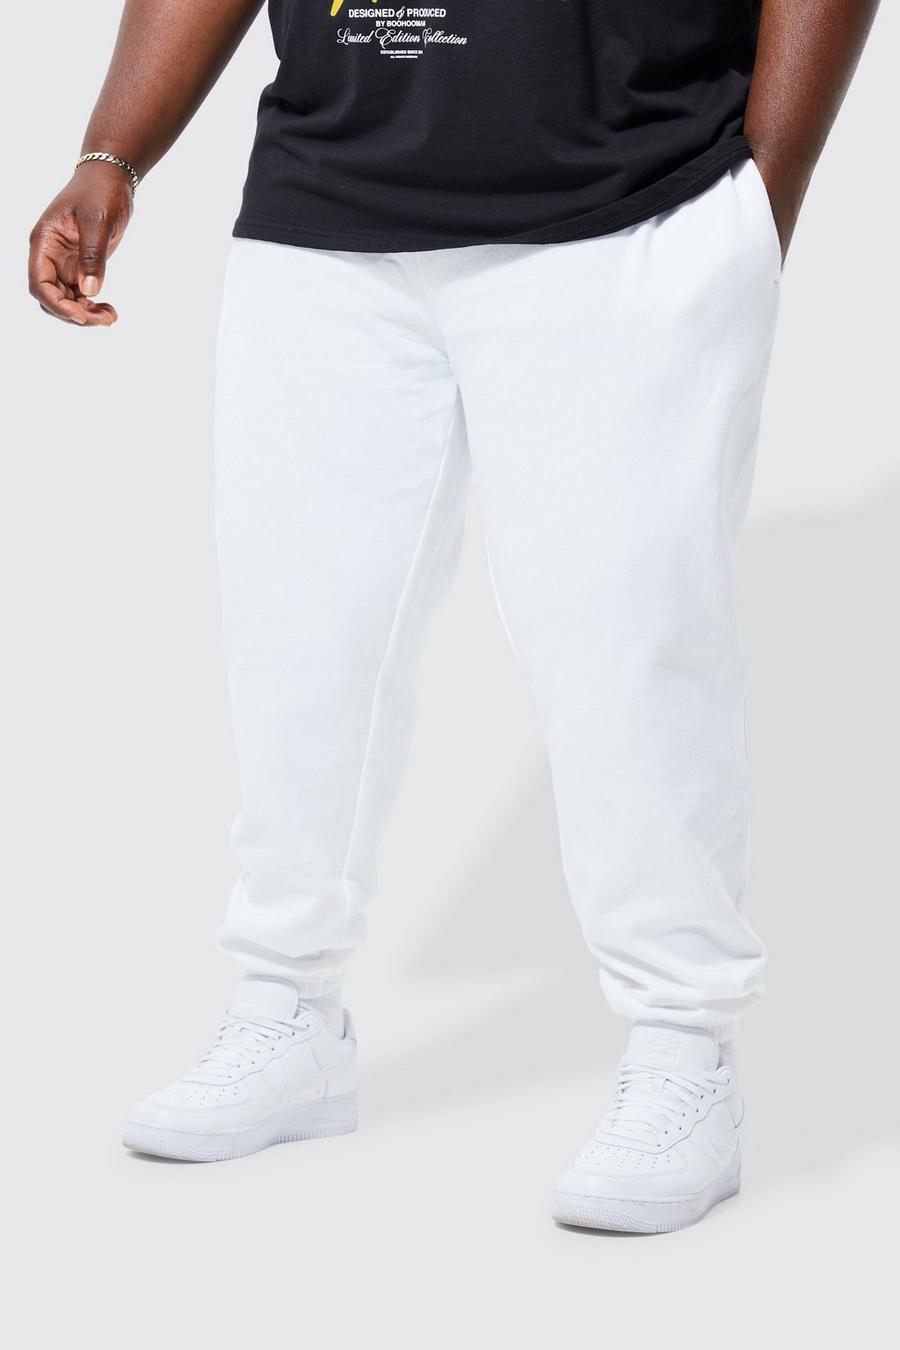 Pantaloni tuta Plus Size Basic, White